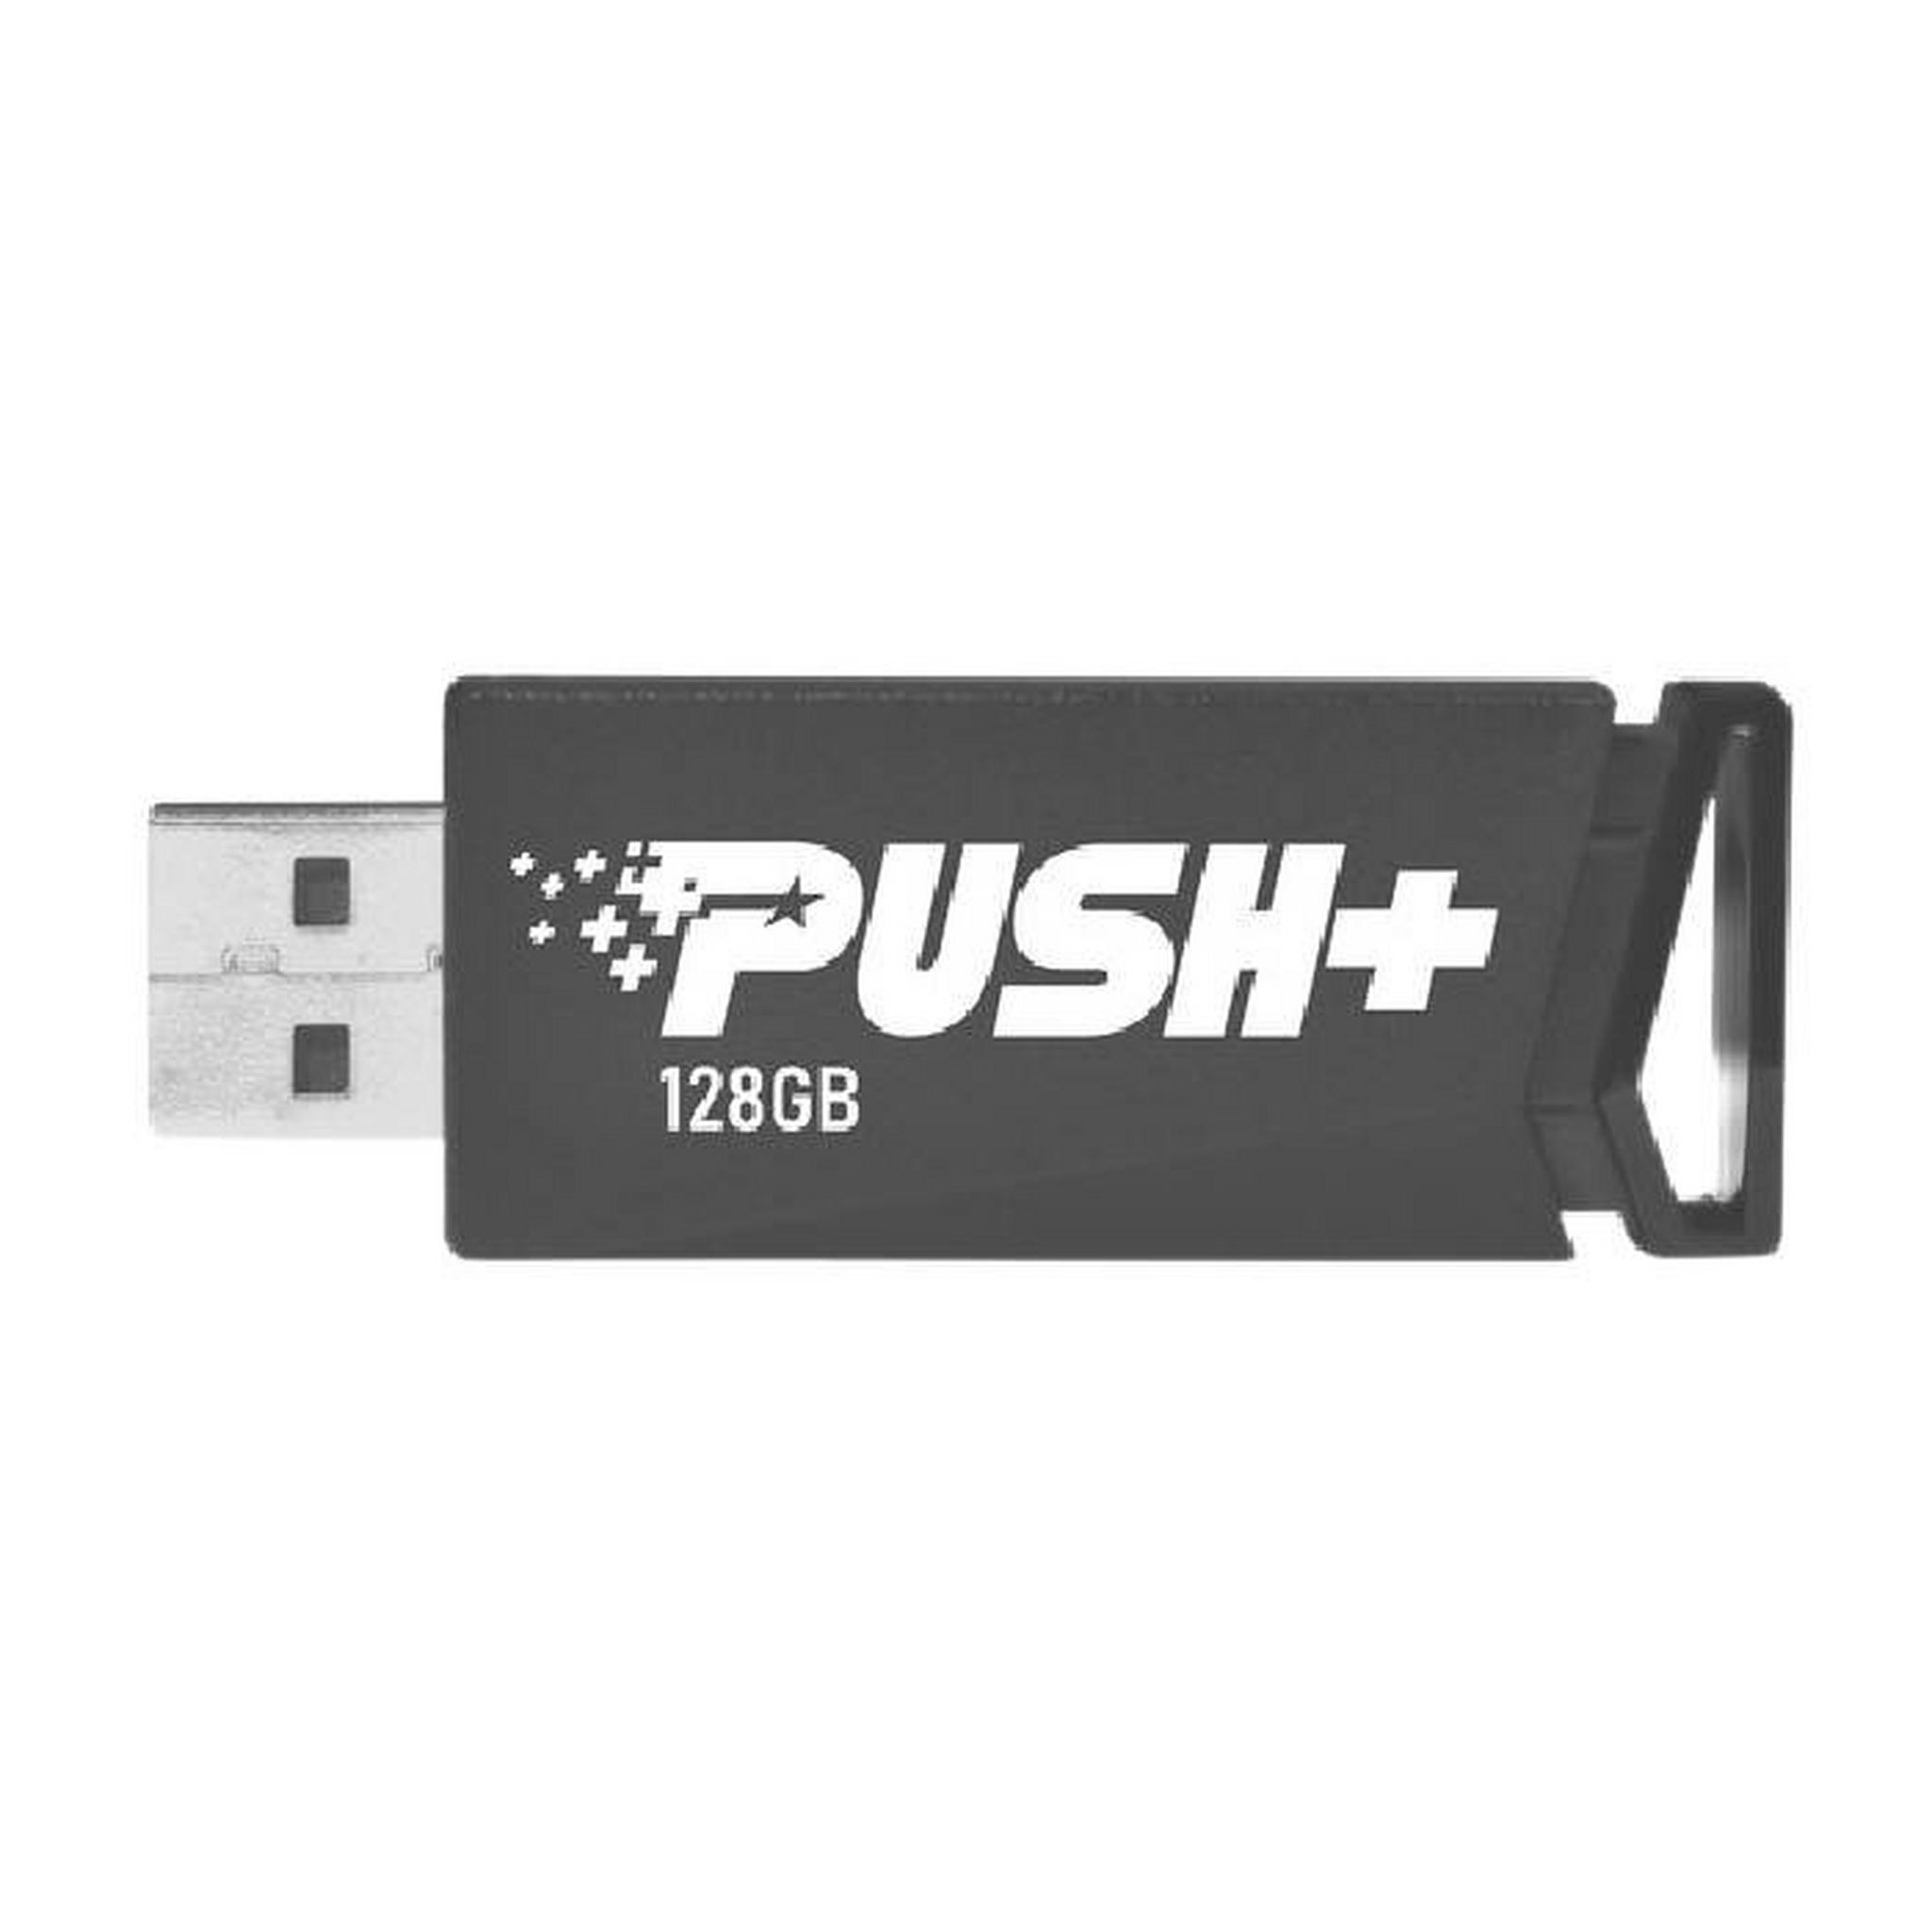 Patriot 128GB Push+ USB 3.2 Gen 1 Flash Drive